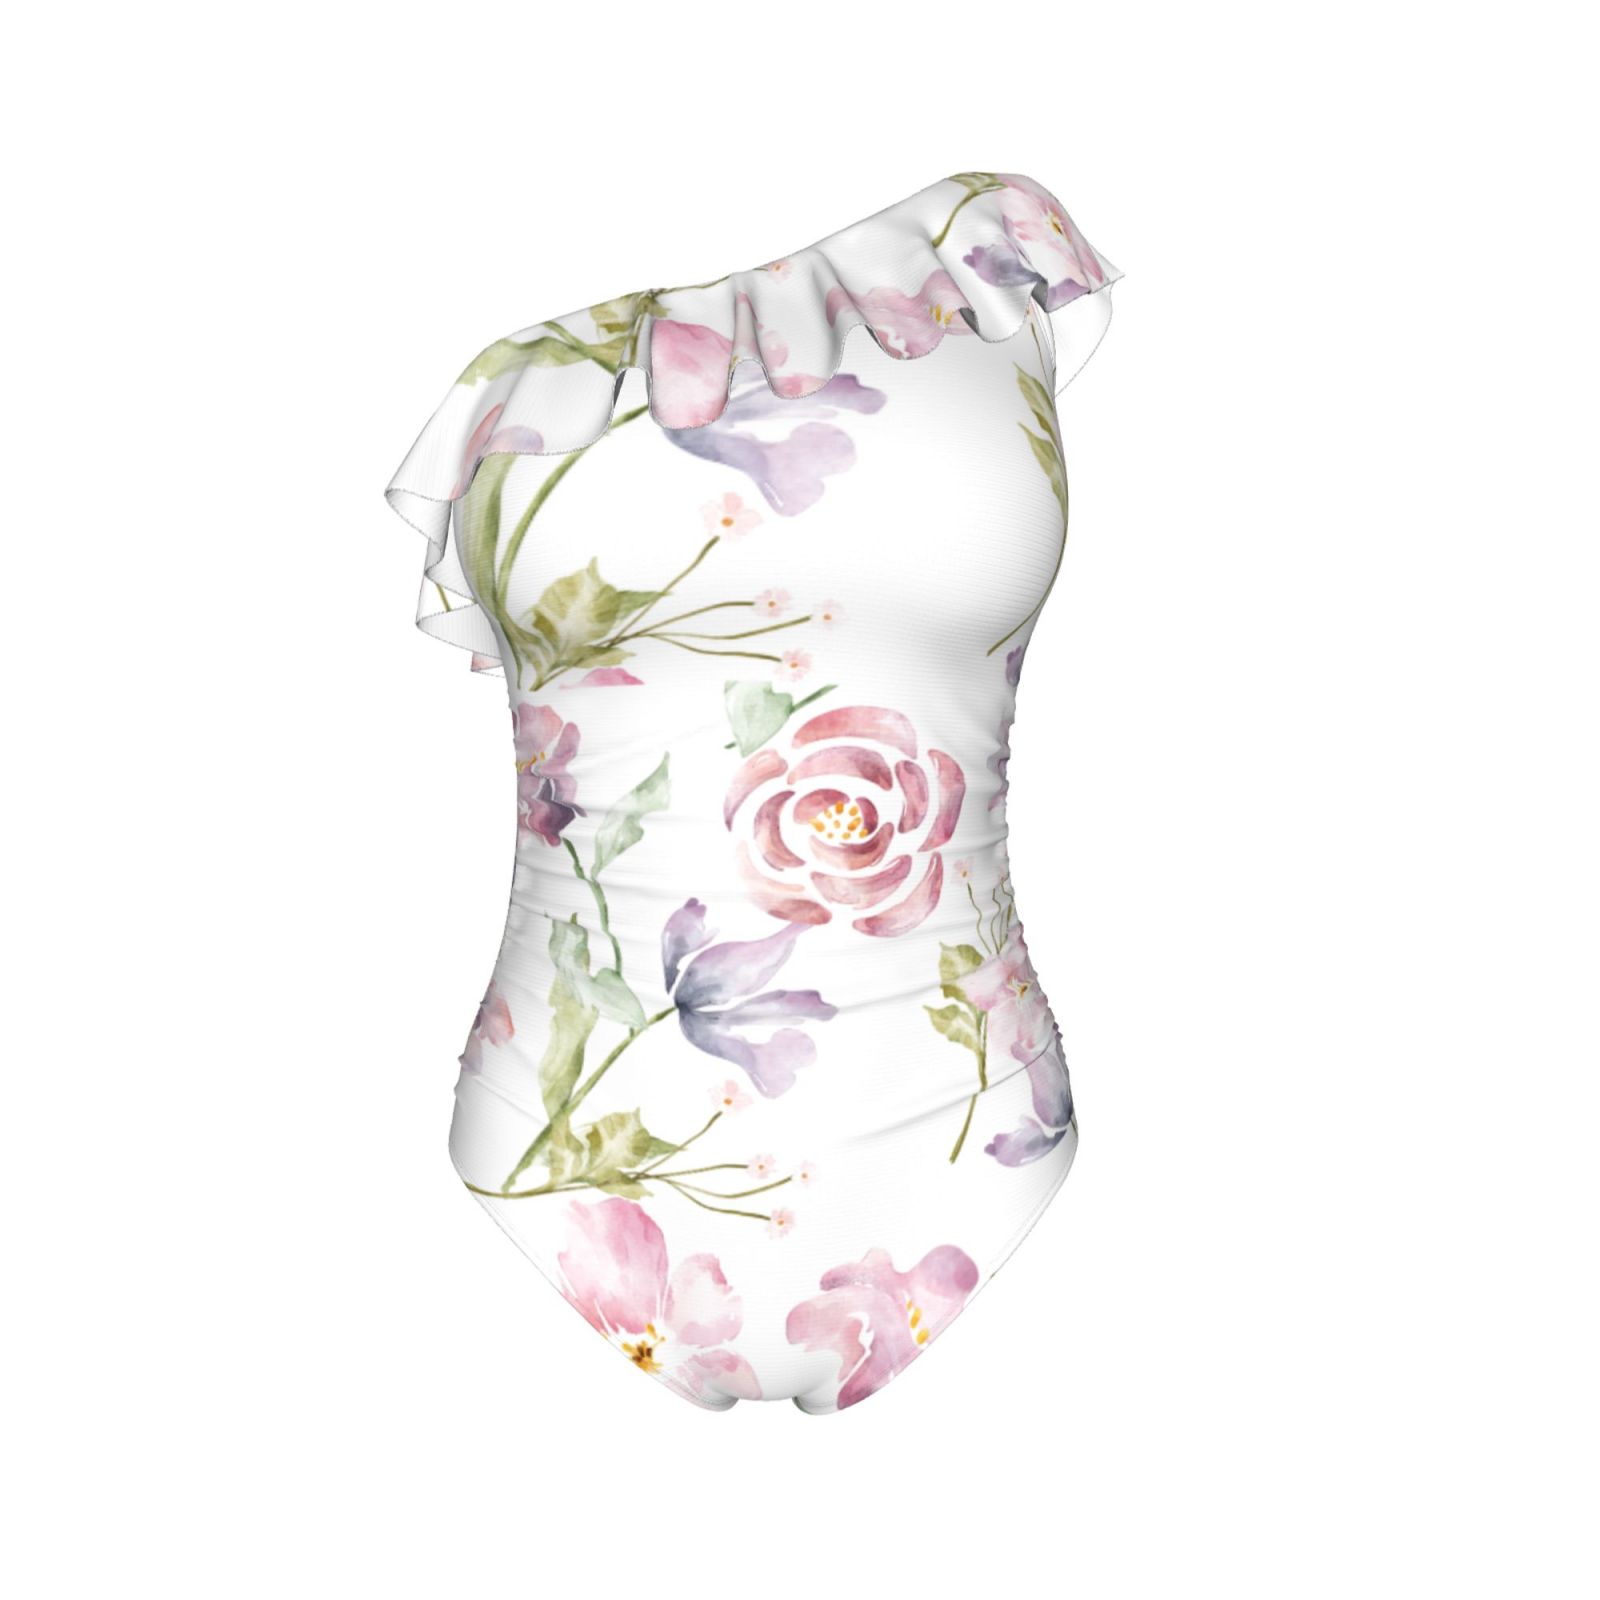 Rose Print Swimsuit